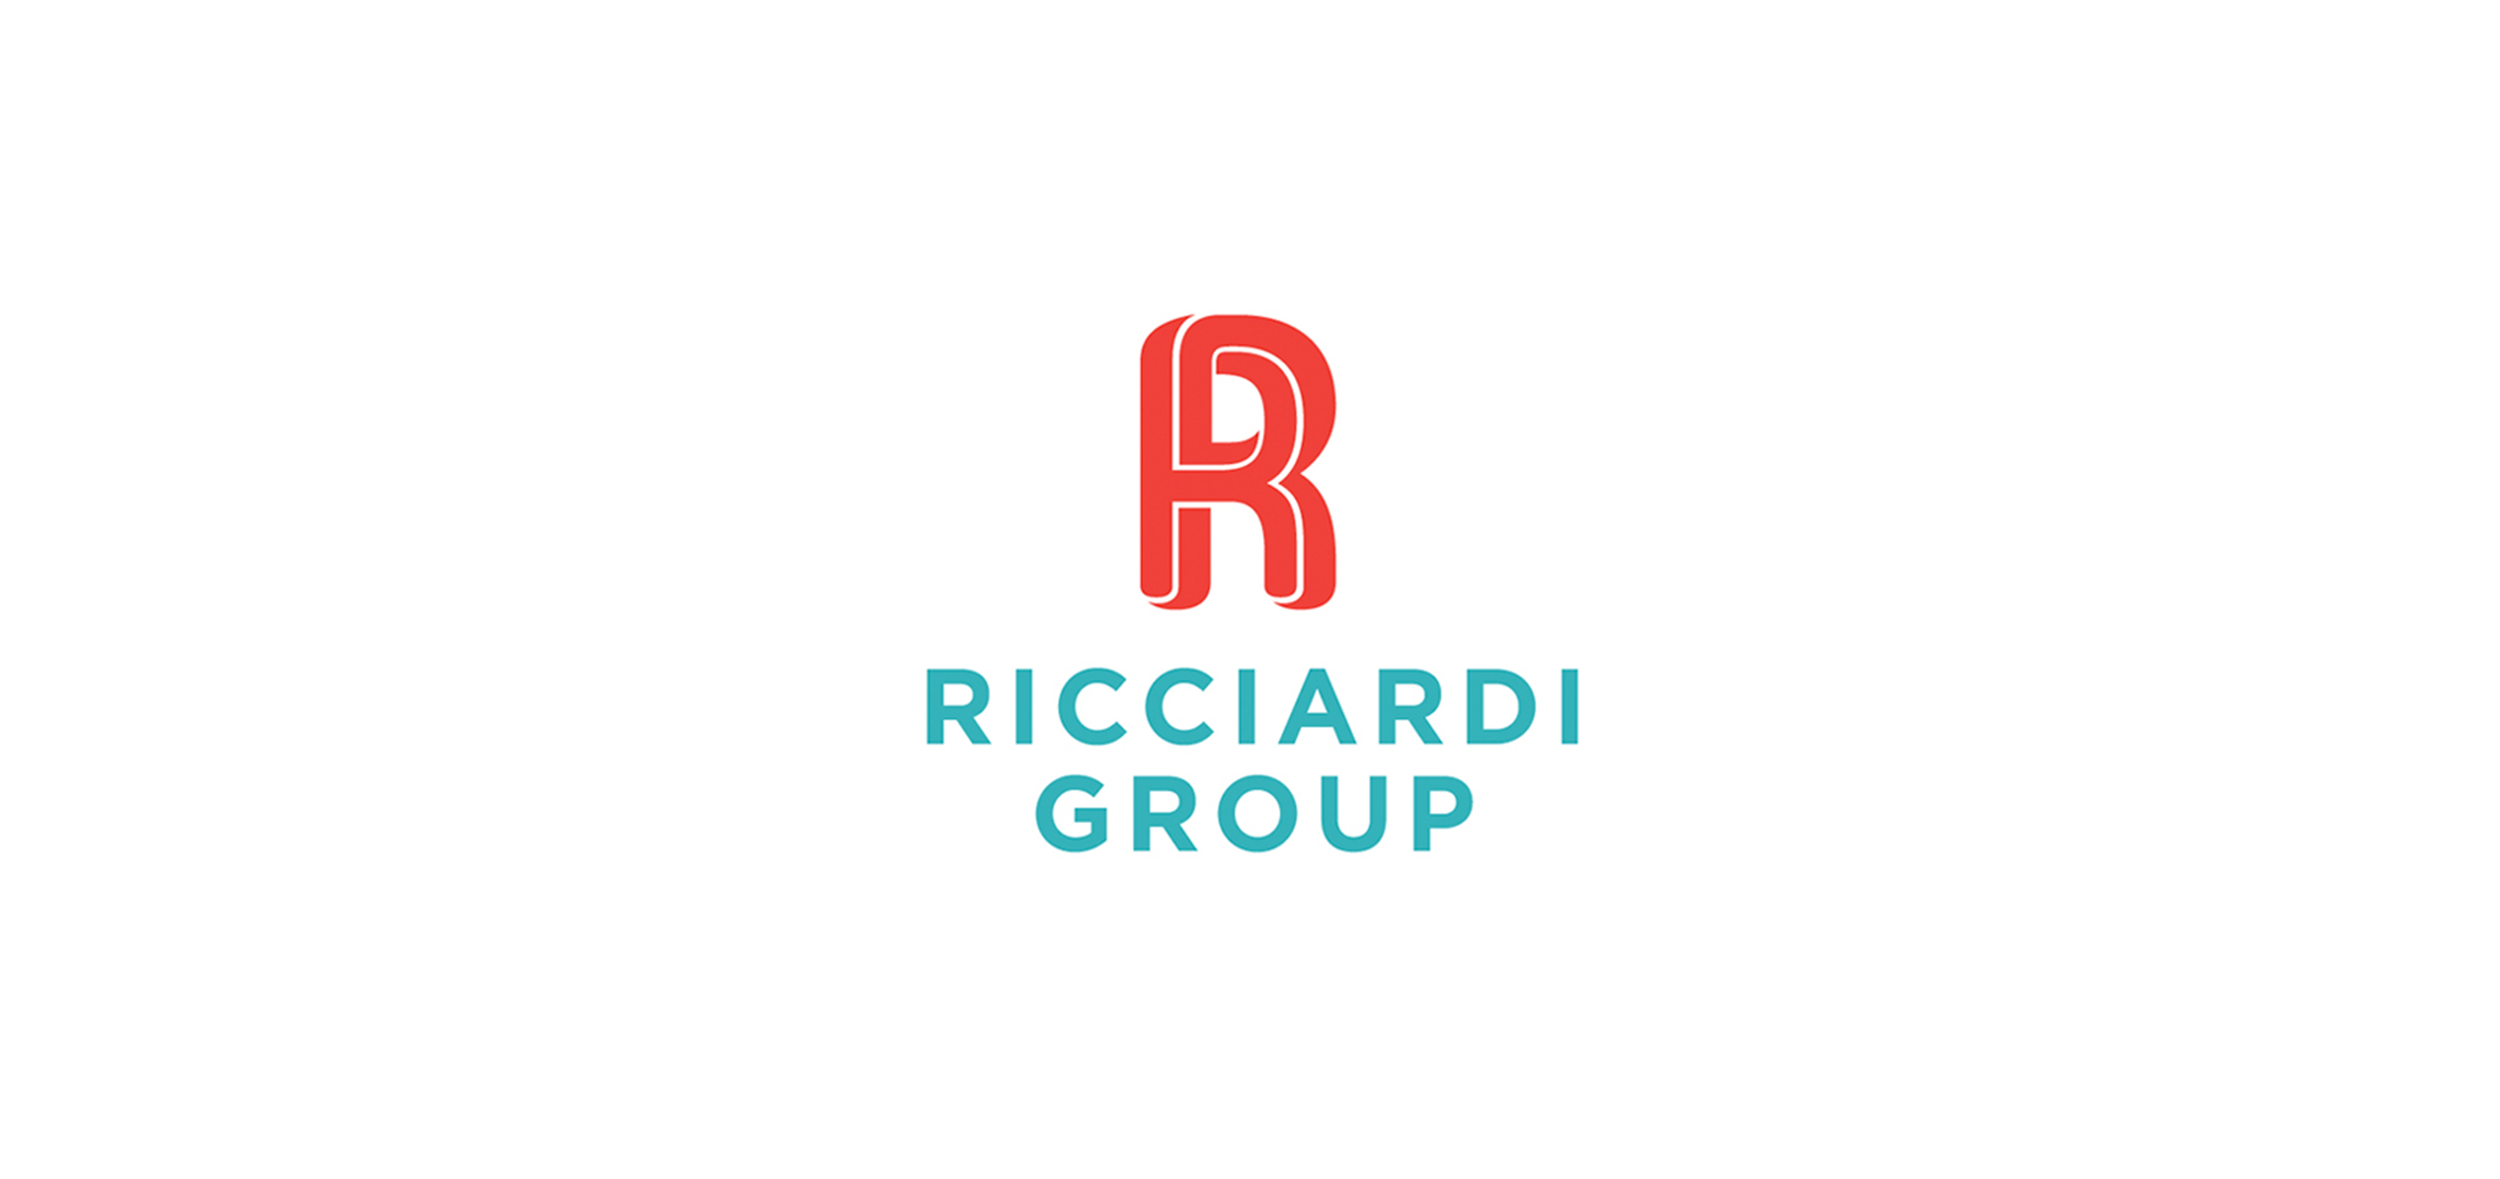 mysisterfred-ricciardigroup-logo.png